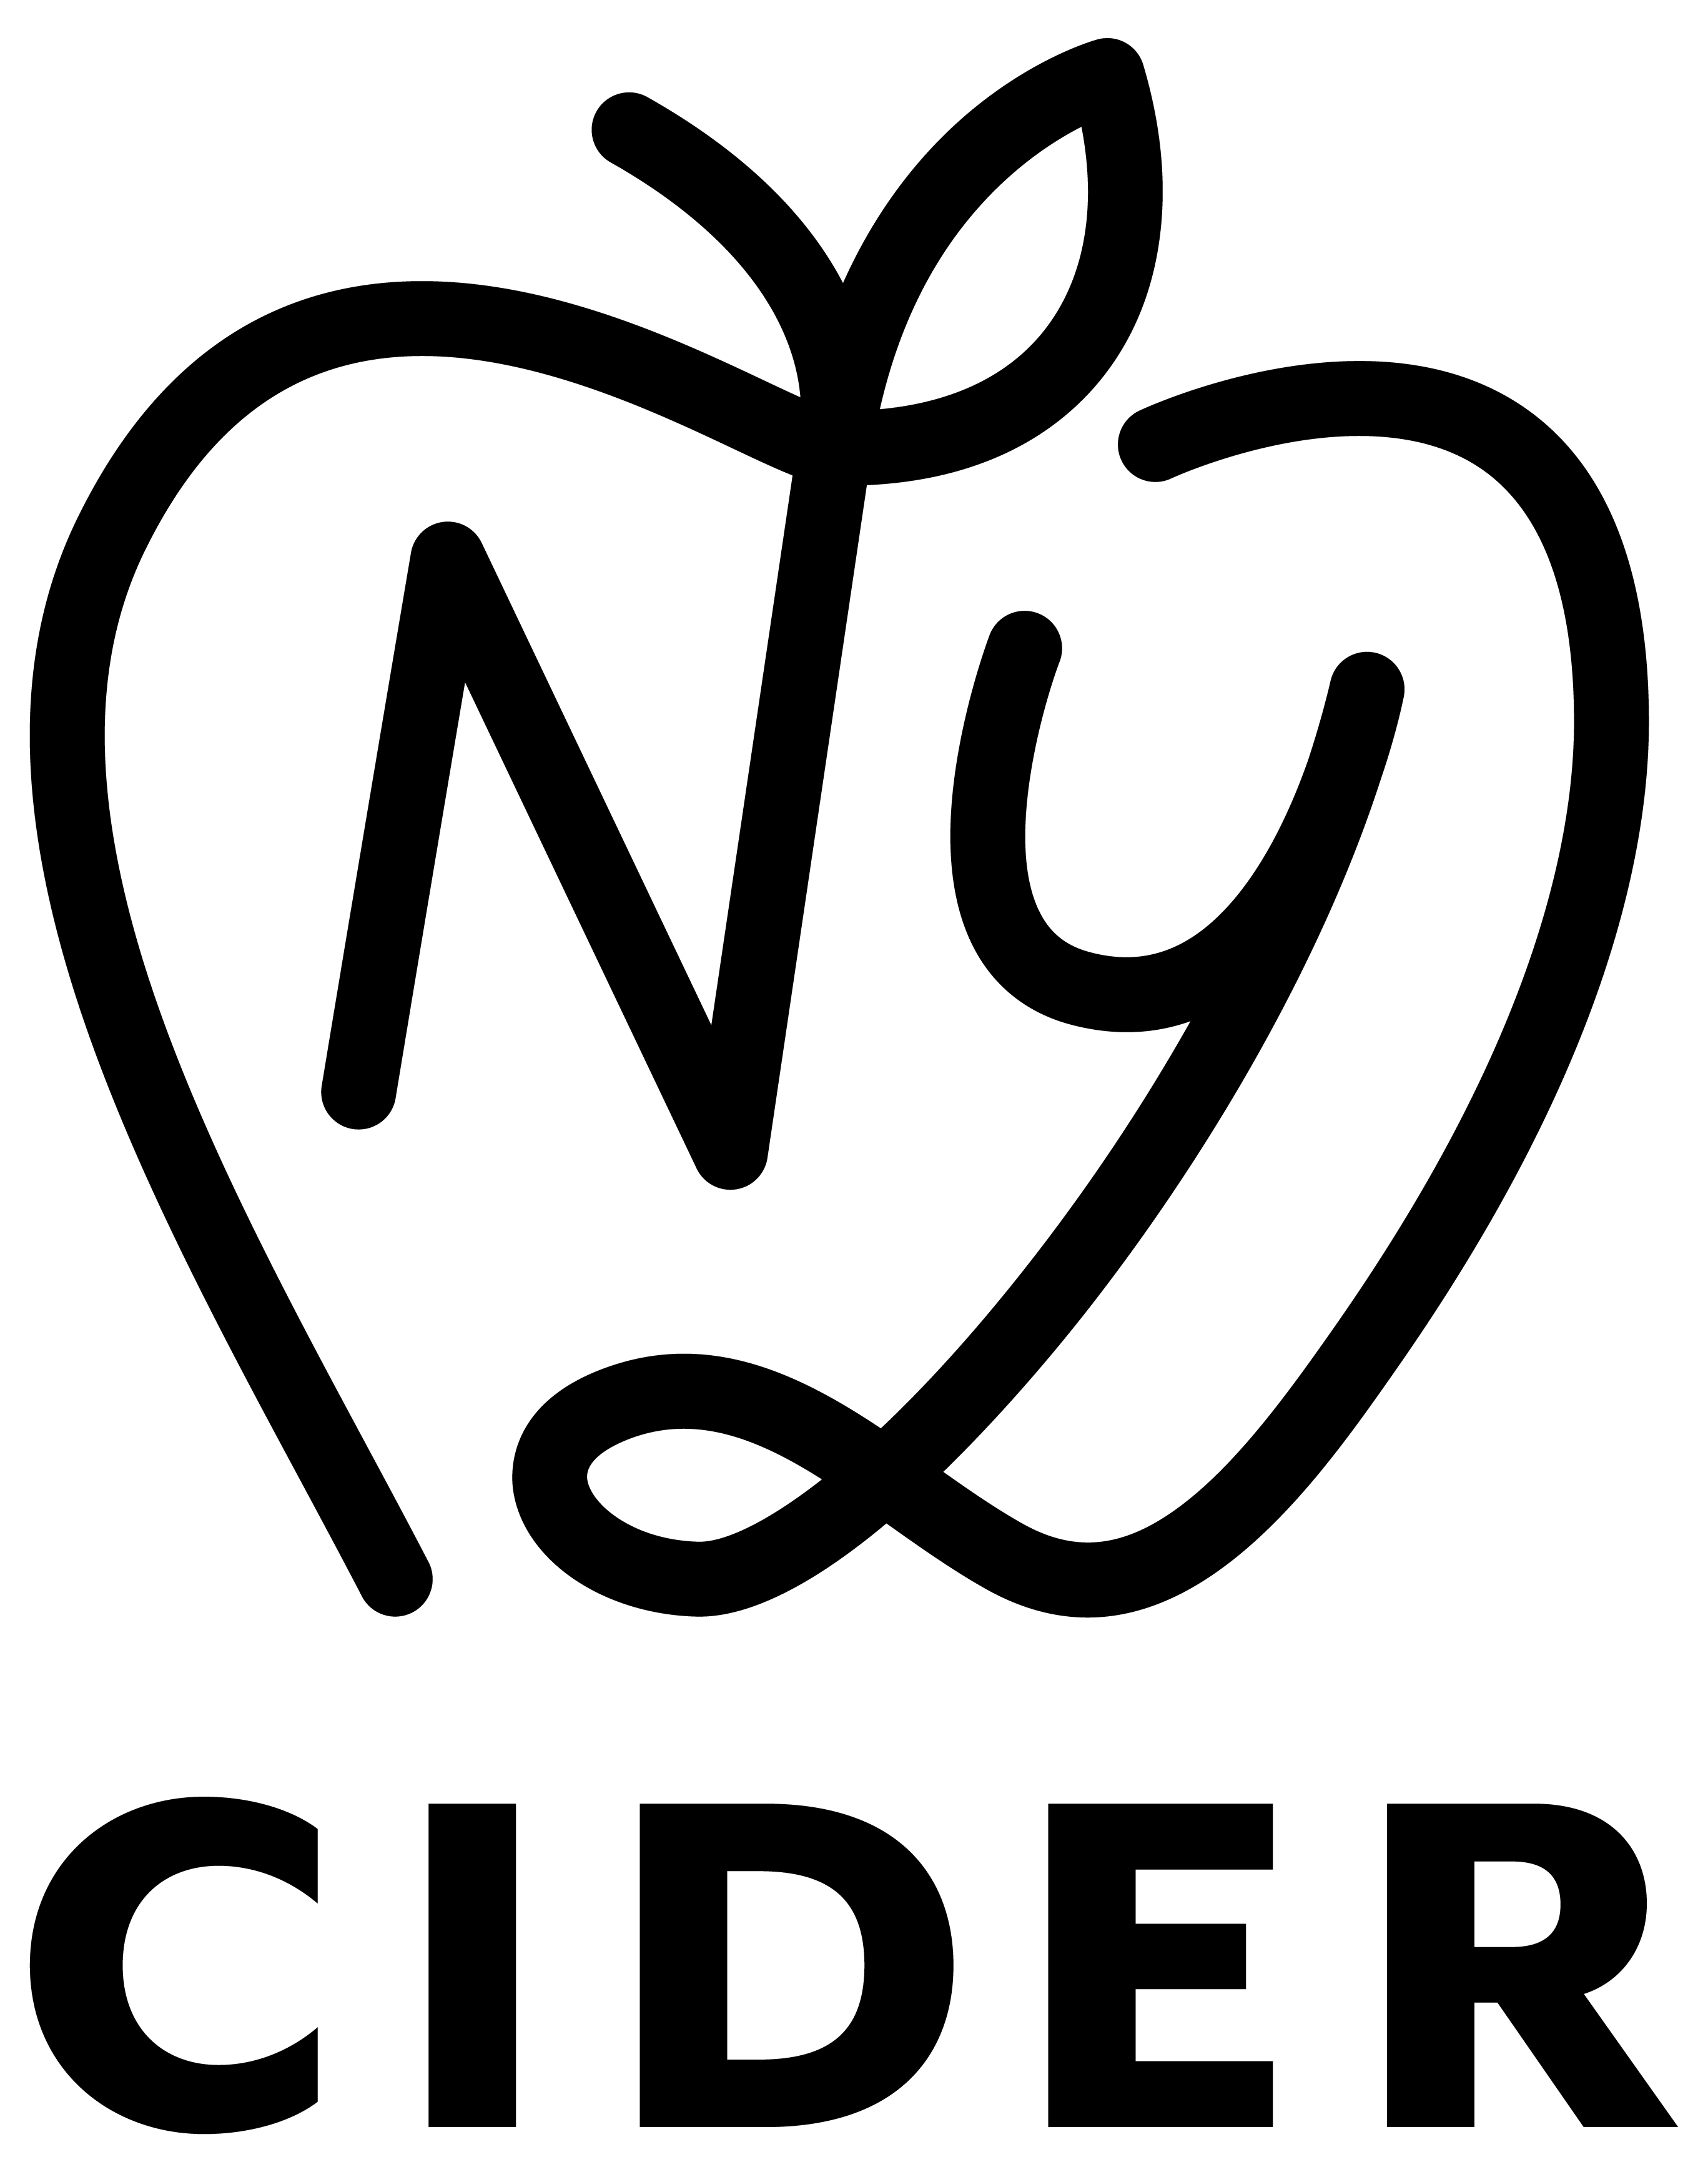 Finger Lakes - Cider Week New York